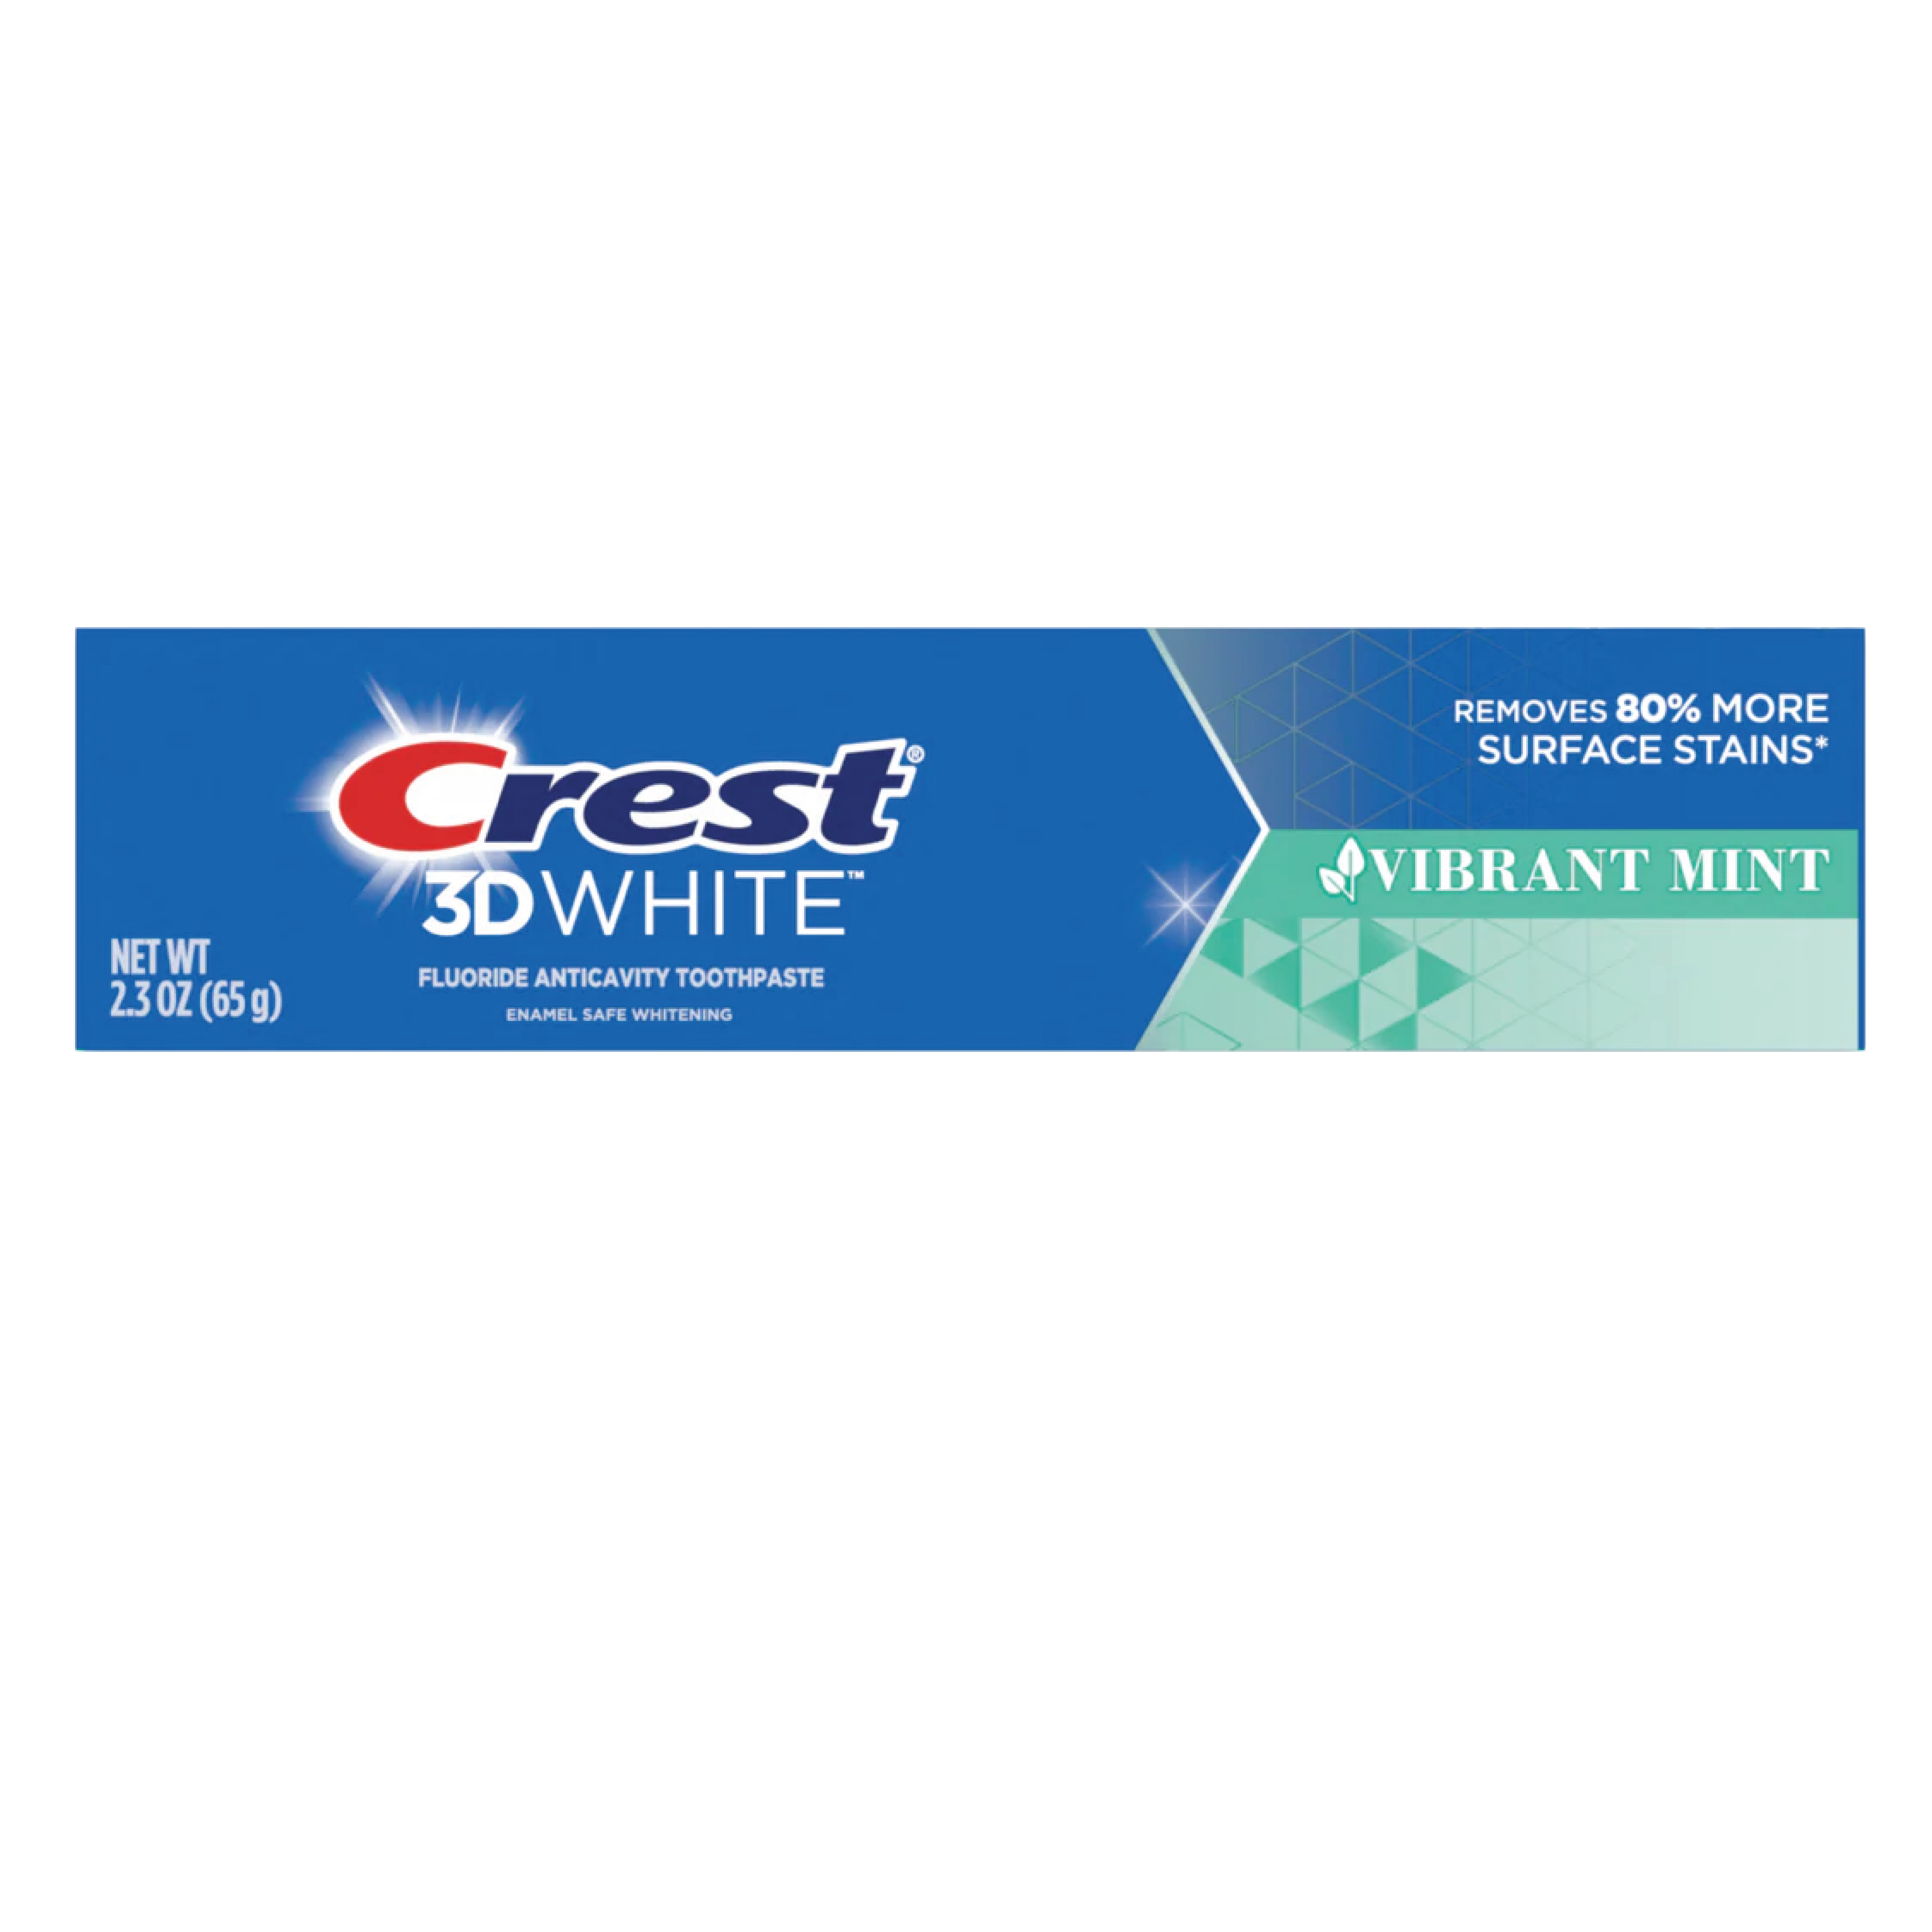 Crest 3D White Vibrant Mint Anticavity Toothpaste 2.3oz